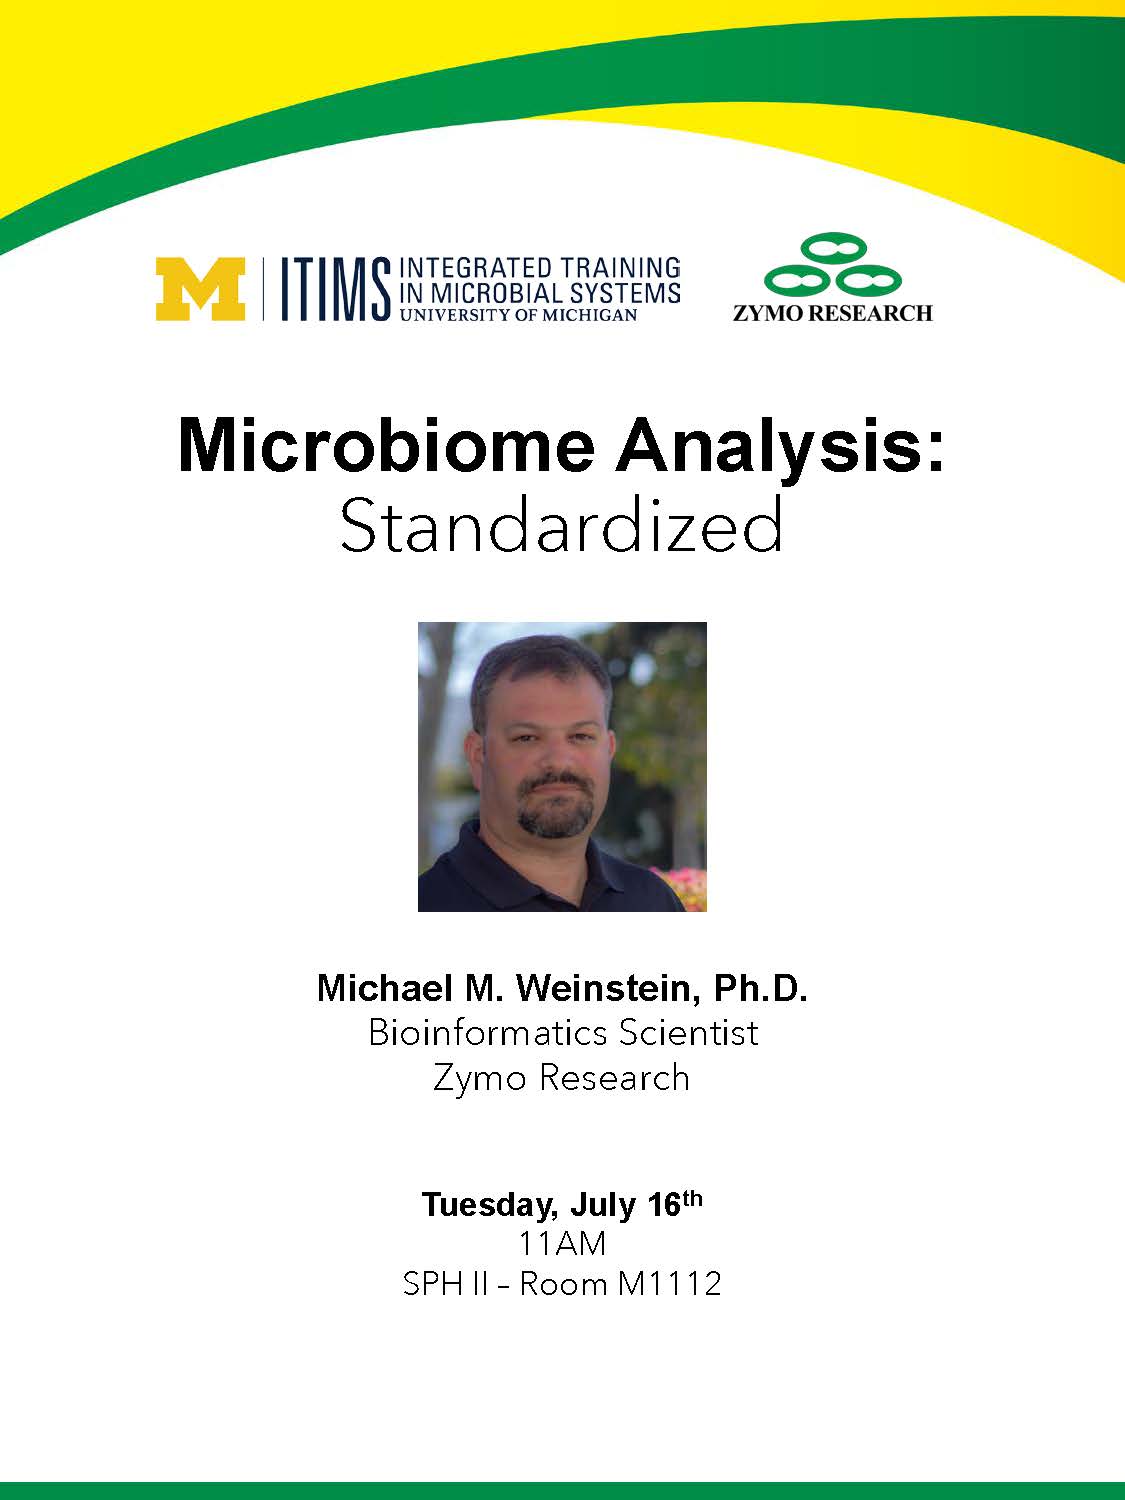 Microbiome Analysis flyer